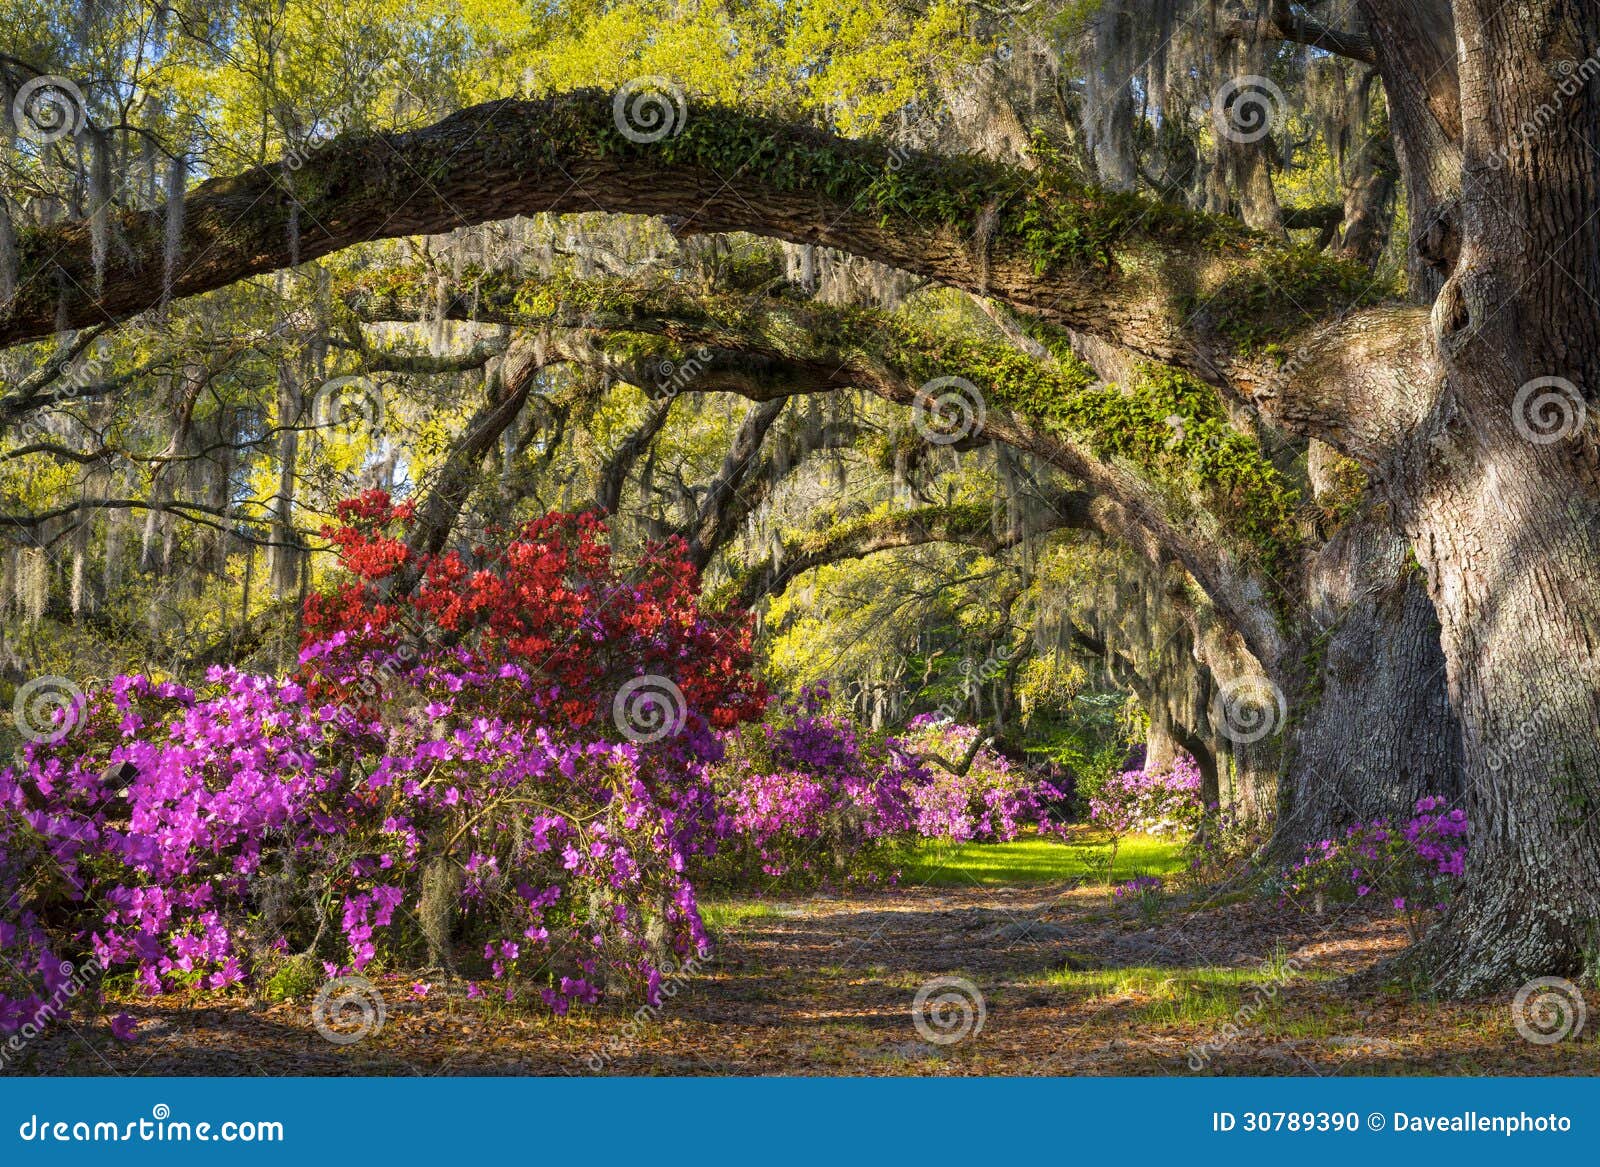 charleston sc spring bloom azalea flowers south carolina plantation garden under live oaks spanish moss 30789390